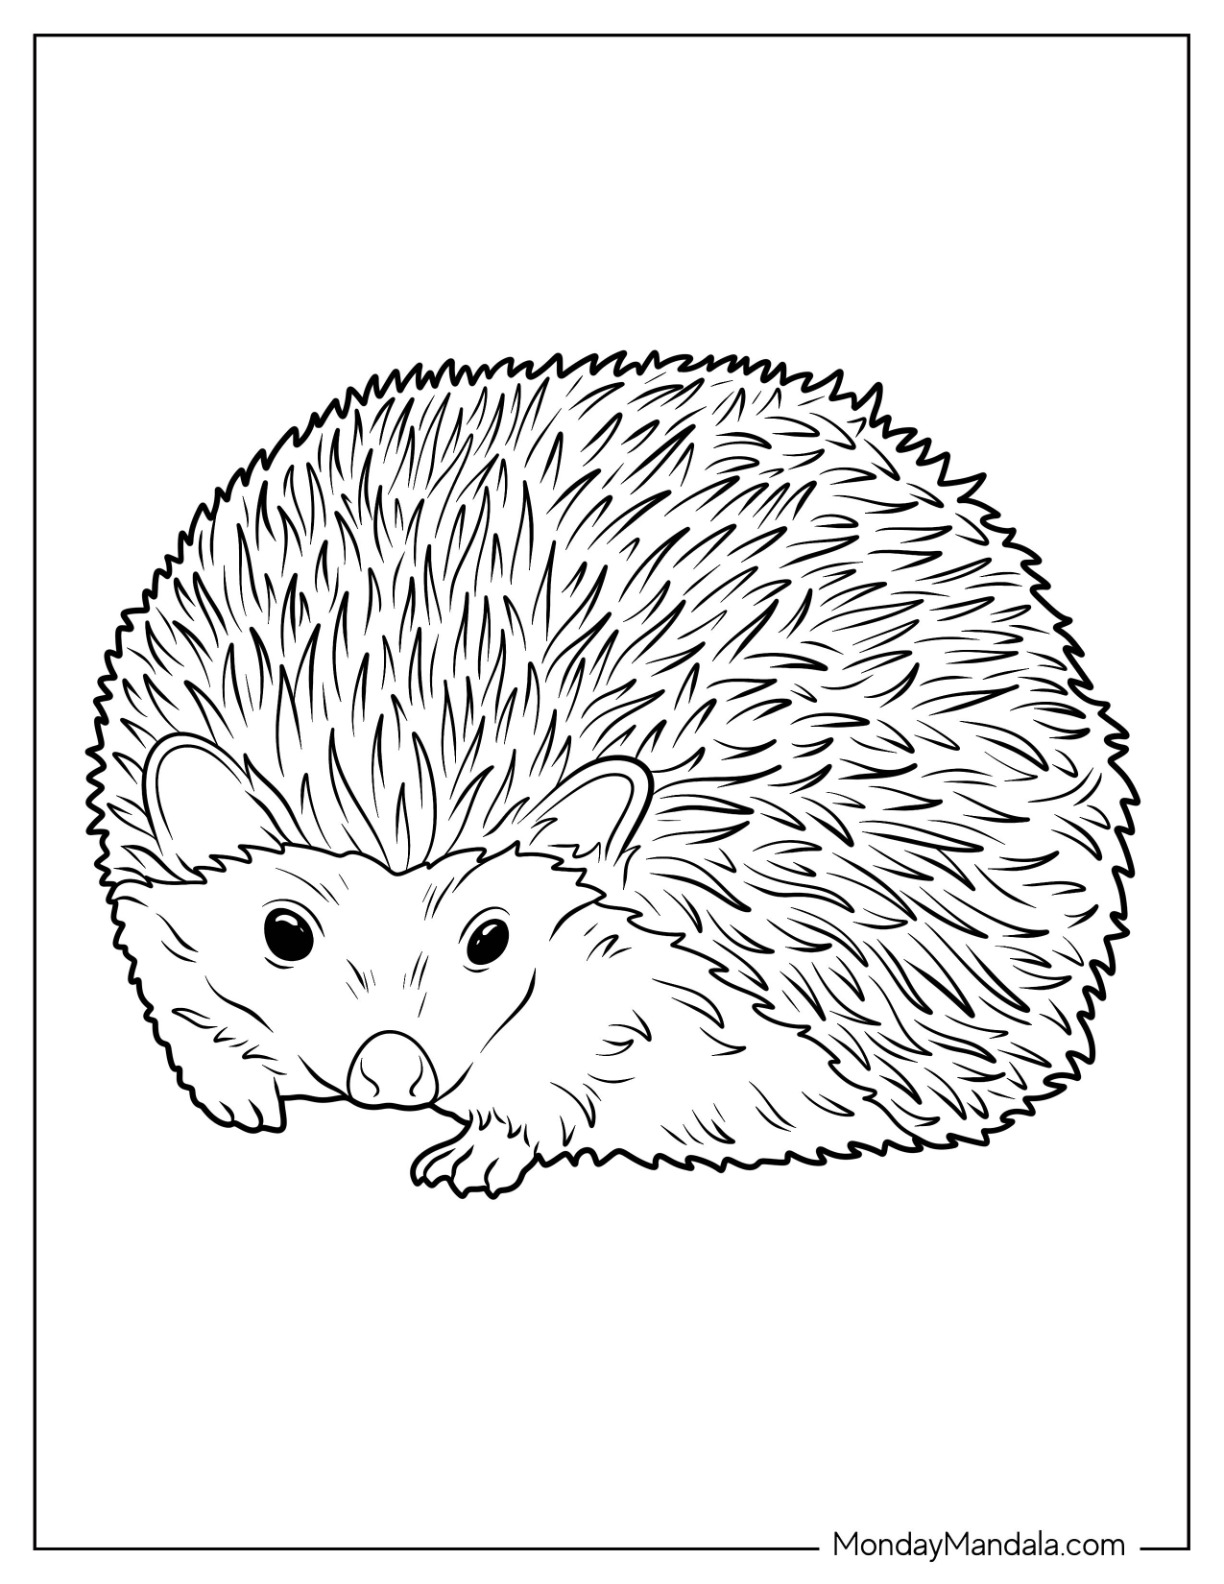 Hedgehog coloring pages free pdf printables